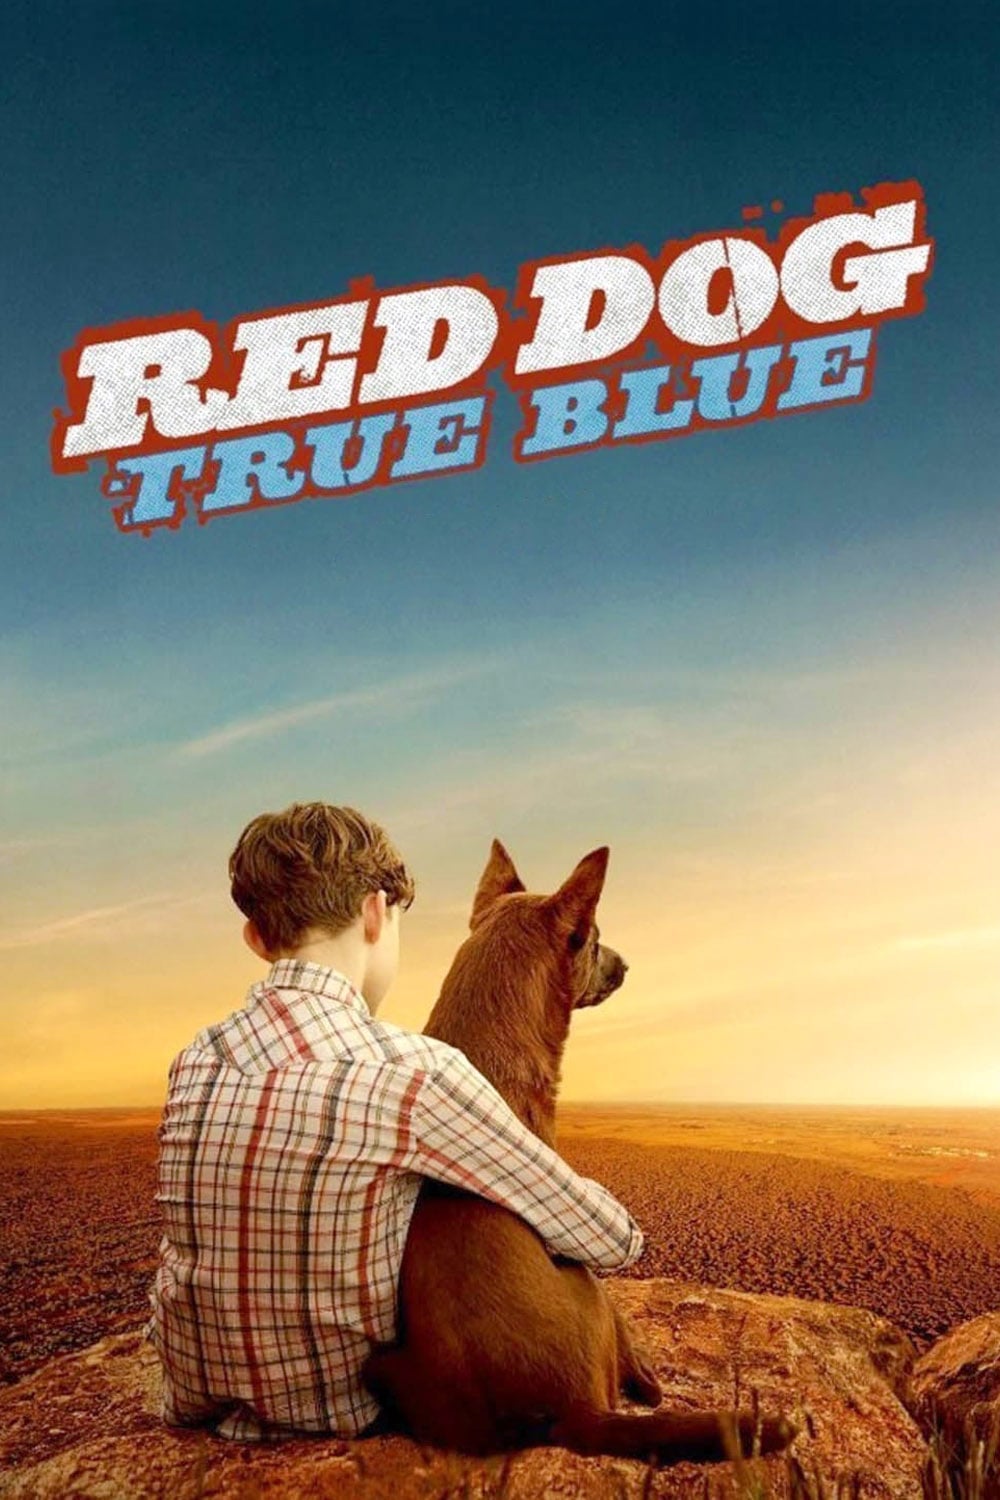 Red Dog True Blue